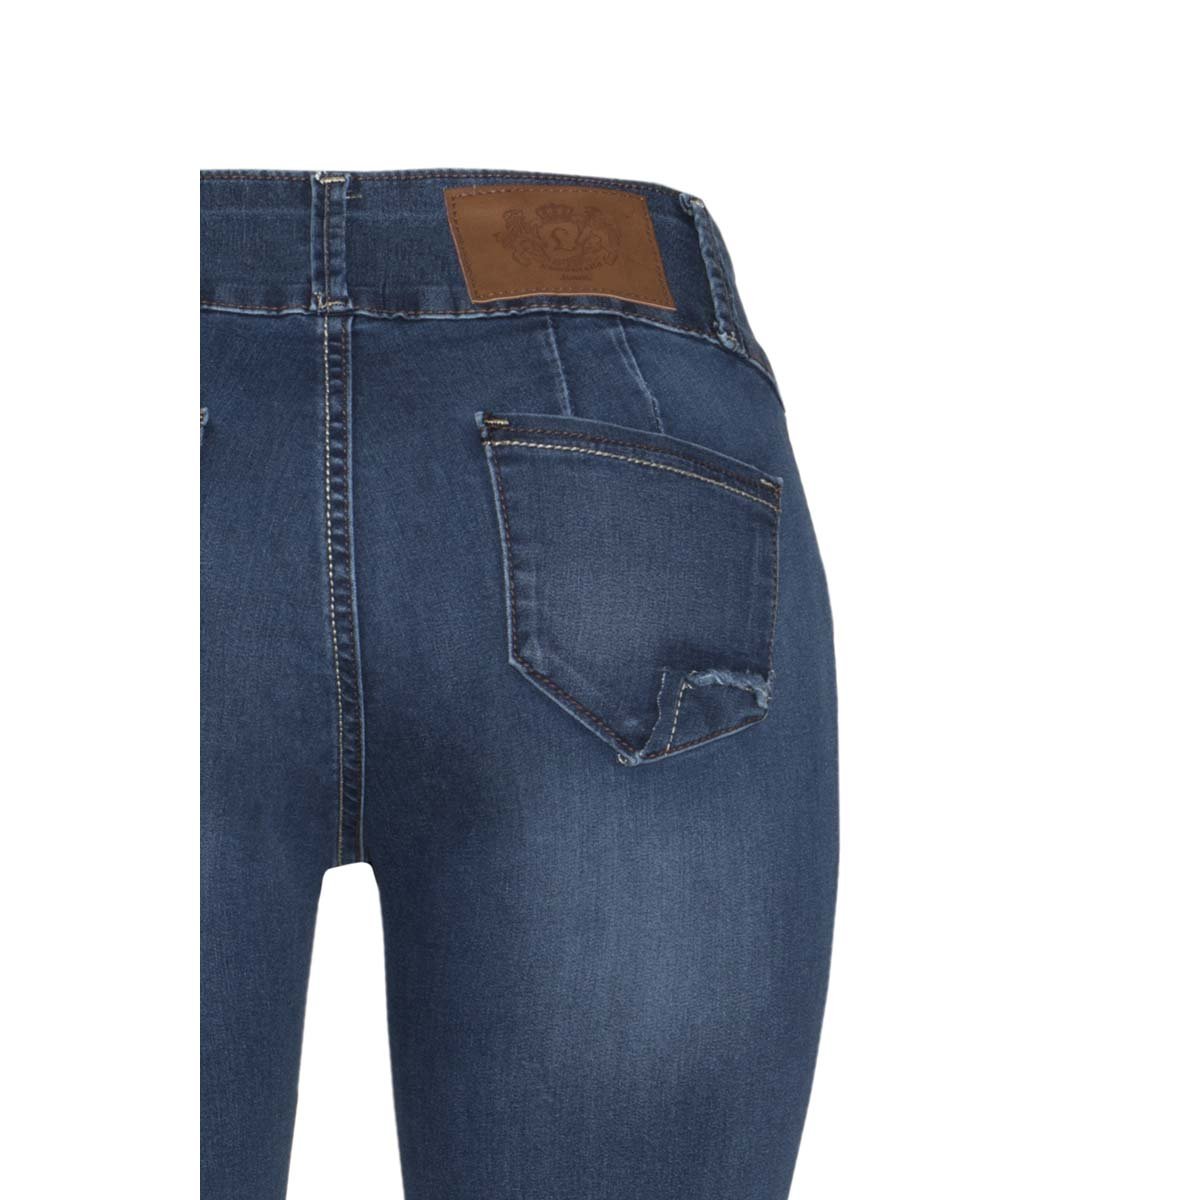 Jeans Skinny con Parche en Bolsas Traseras Limoncello